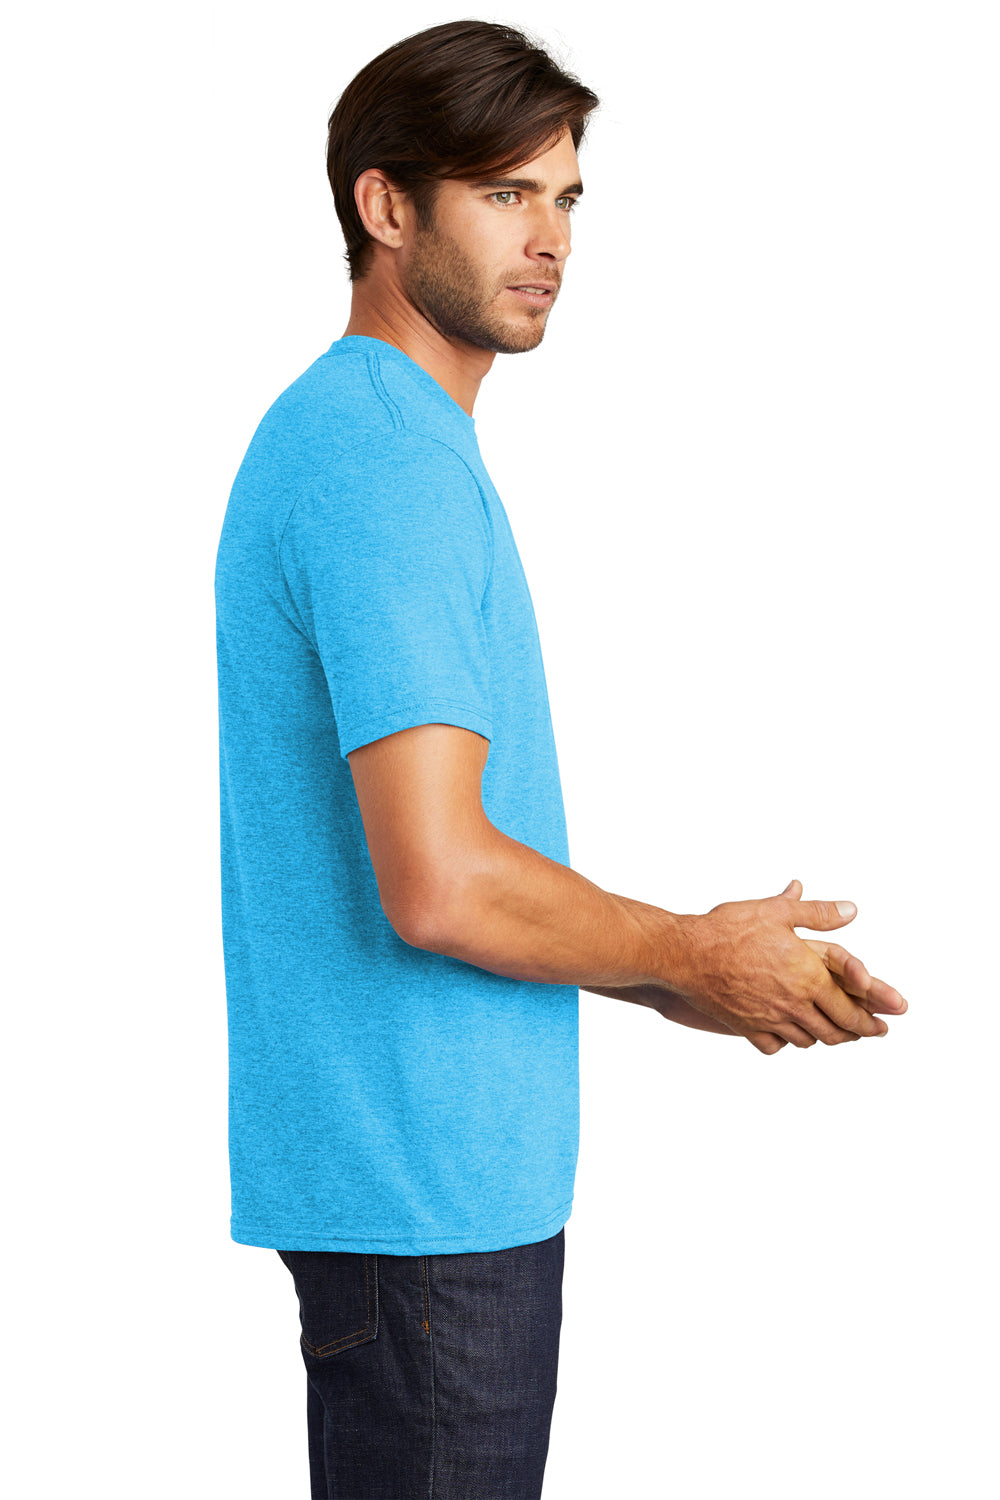 District DM130 Mens Perfect Tri Short Sleeve Crewneck T-Shirt Turquoise Blue Frost Side